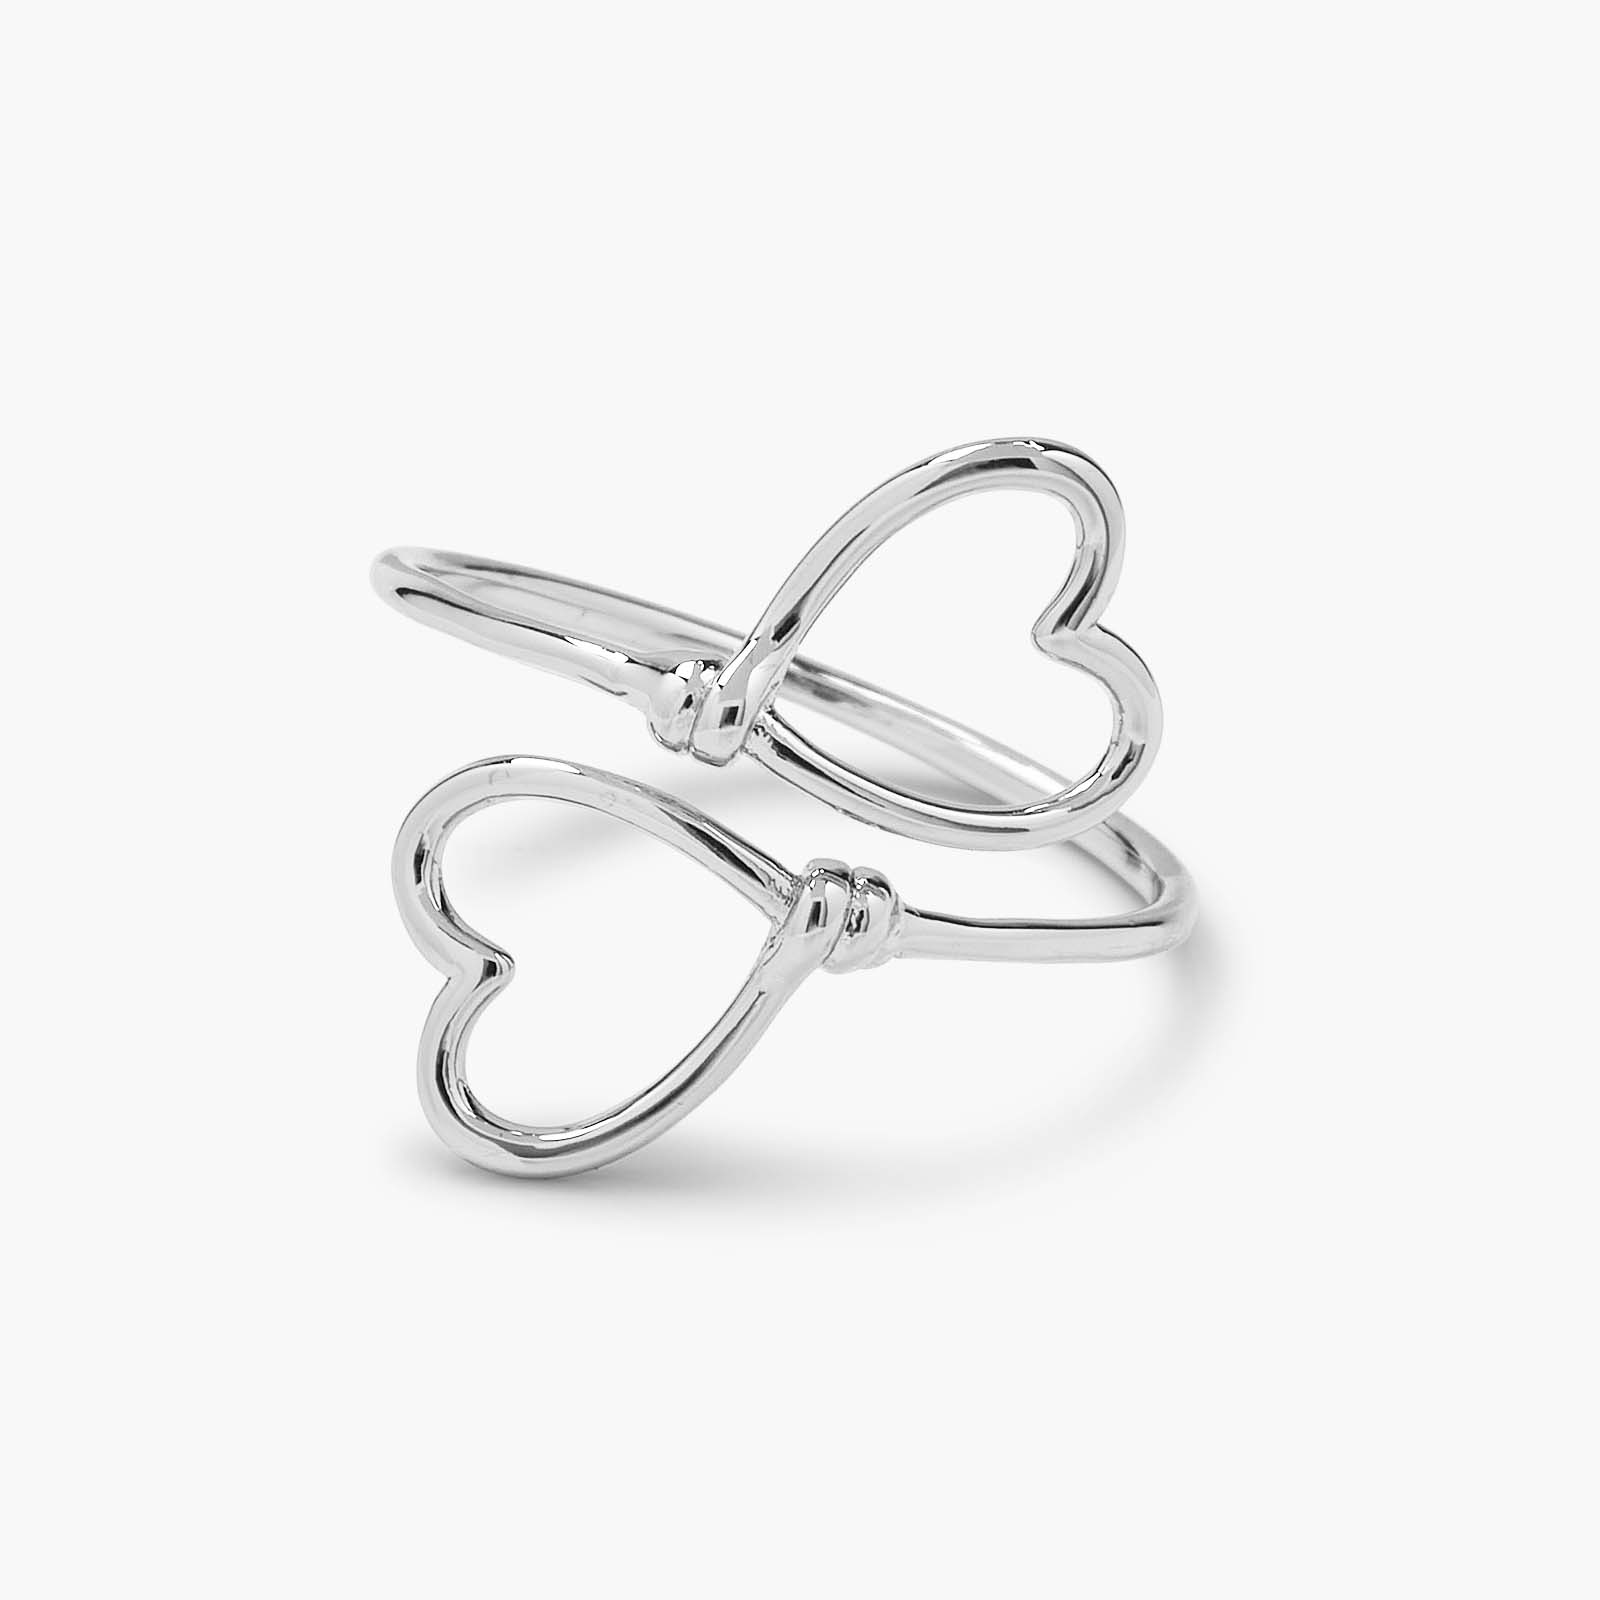 Pura Vida Statement Heart Ring - Silver - 8